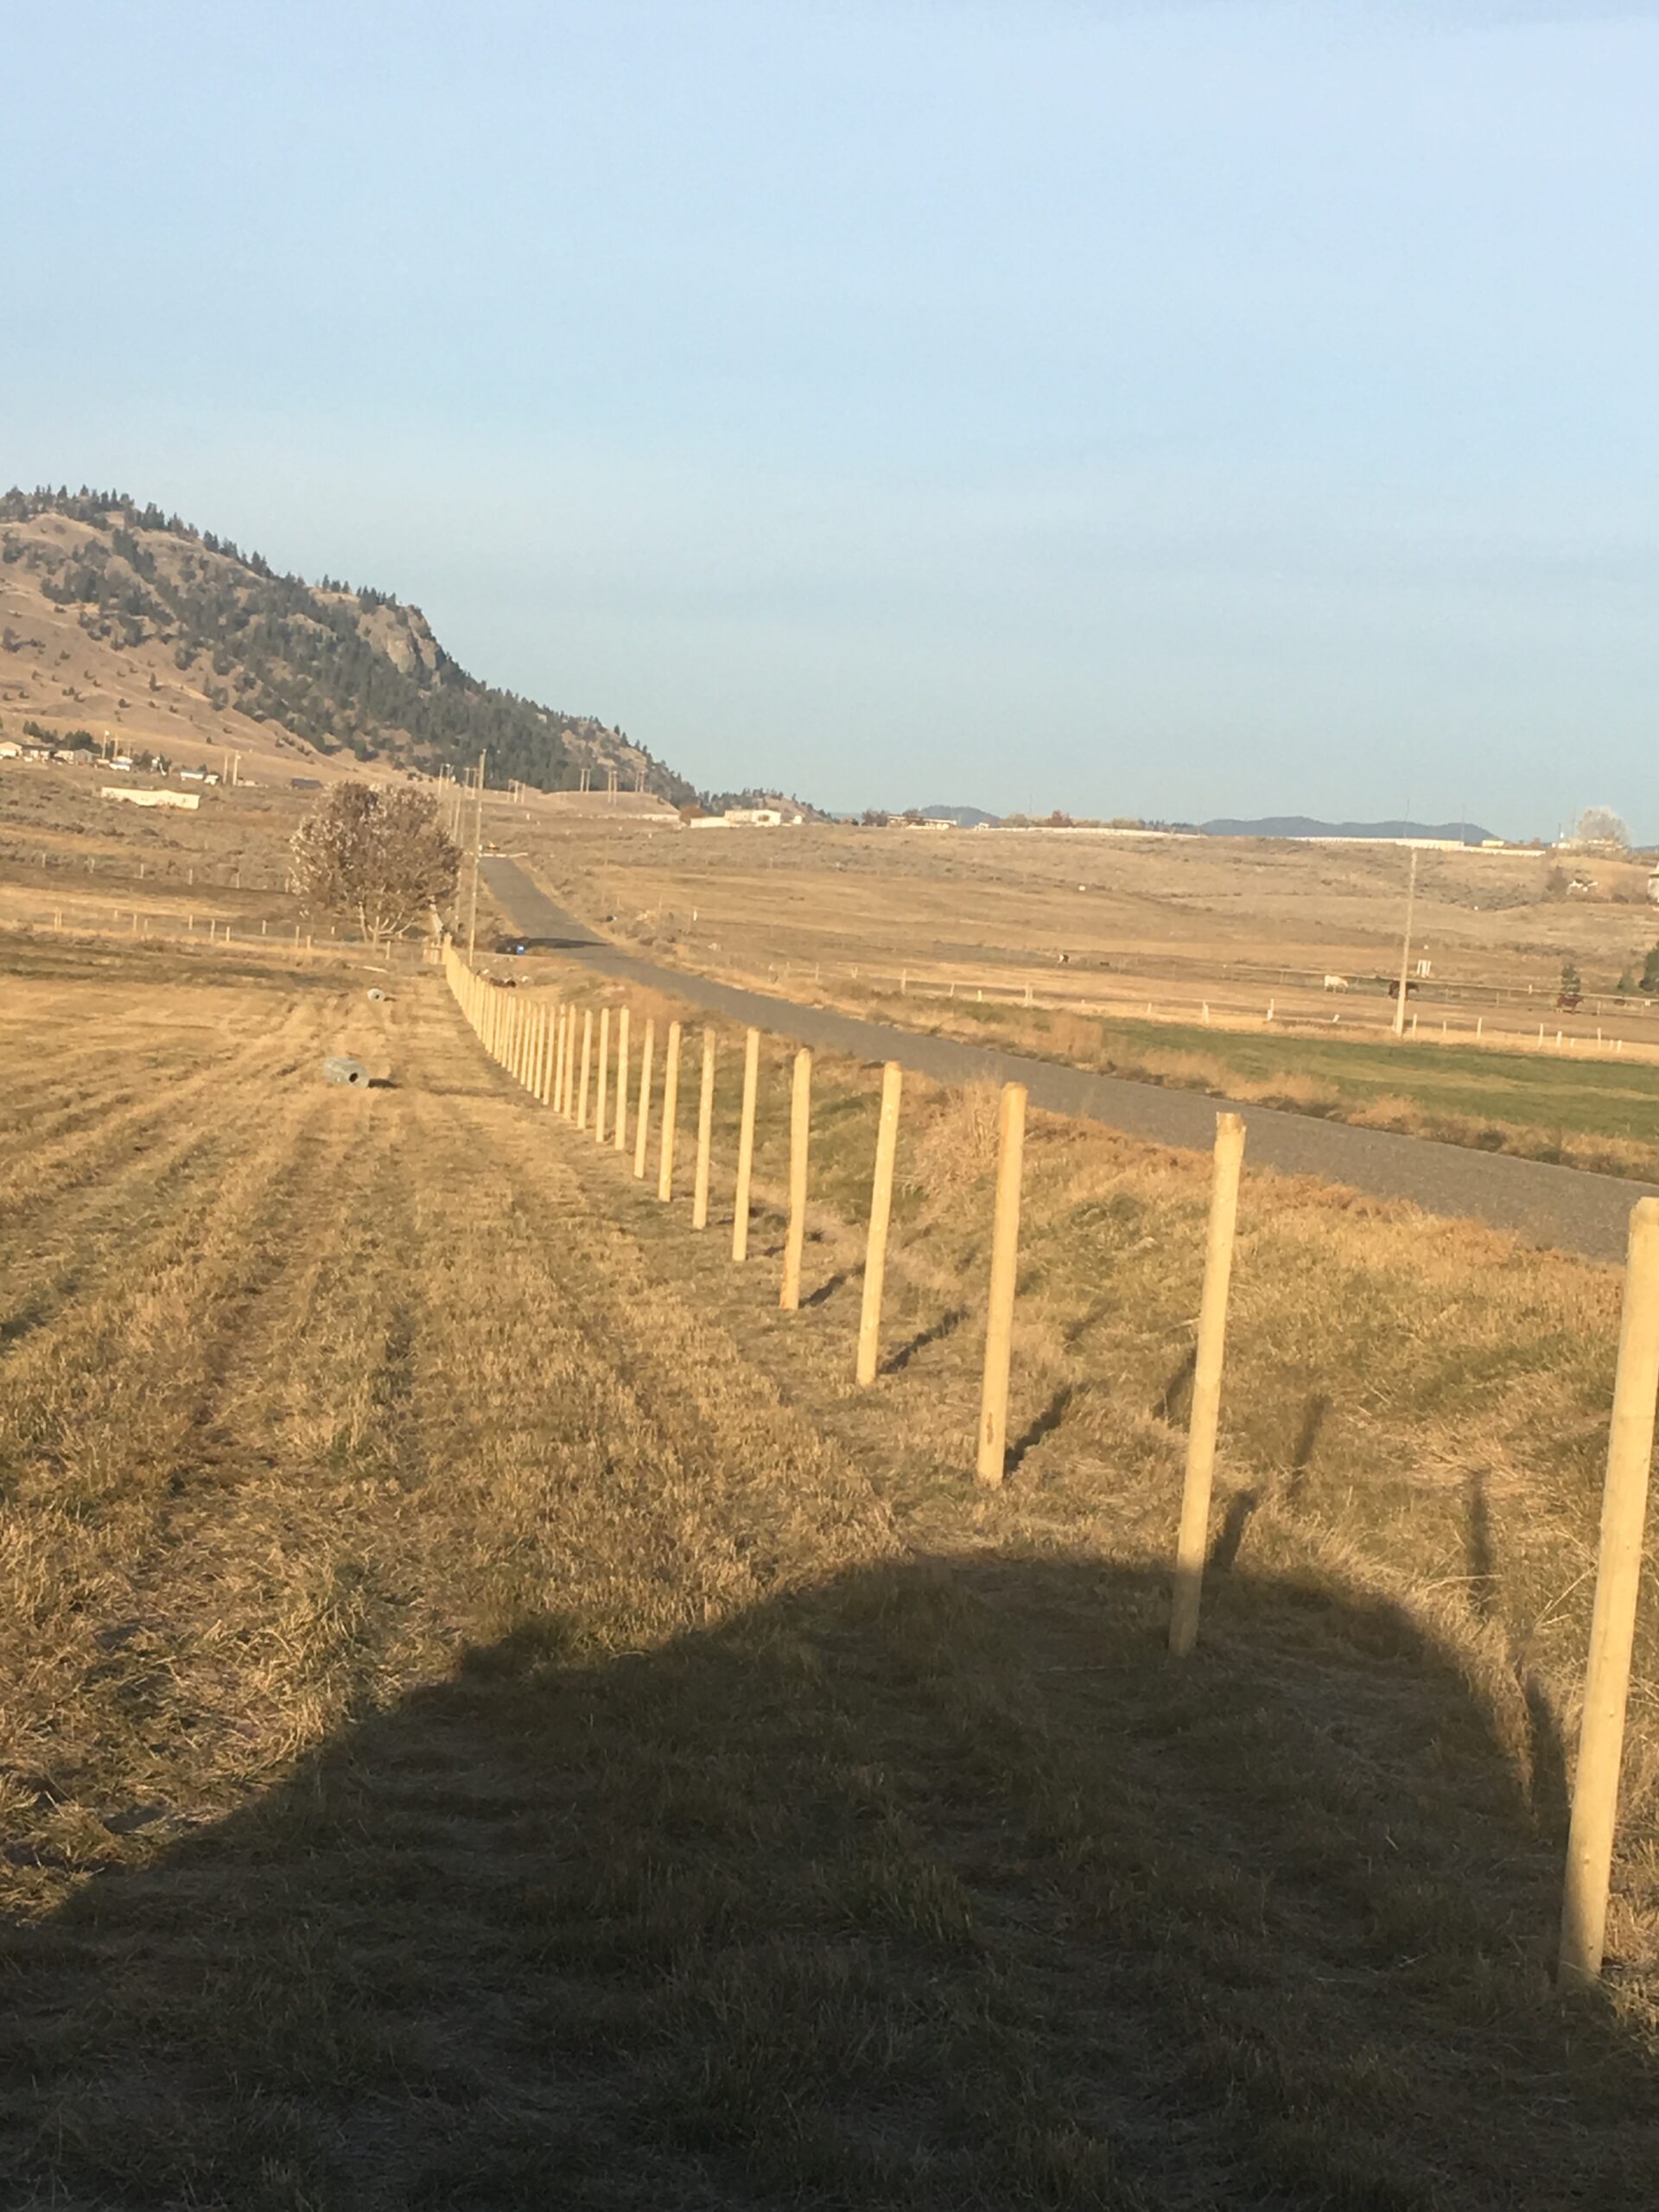 Constructing an agricultural farm fence